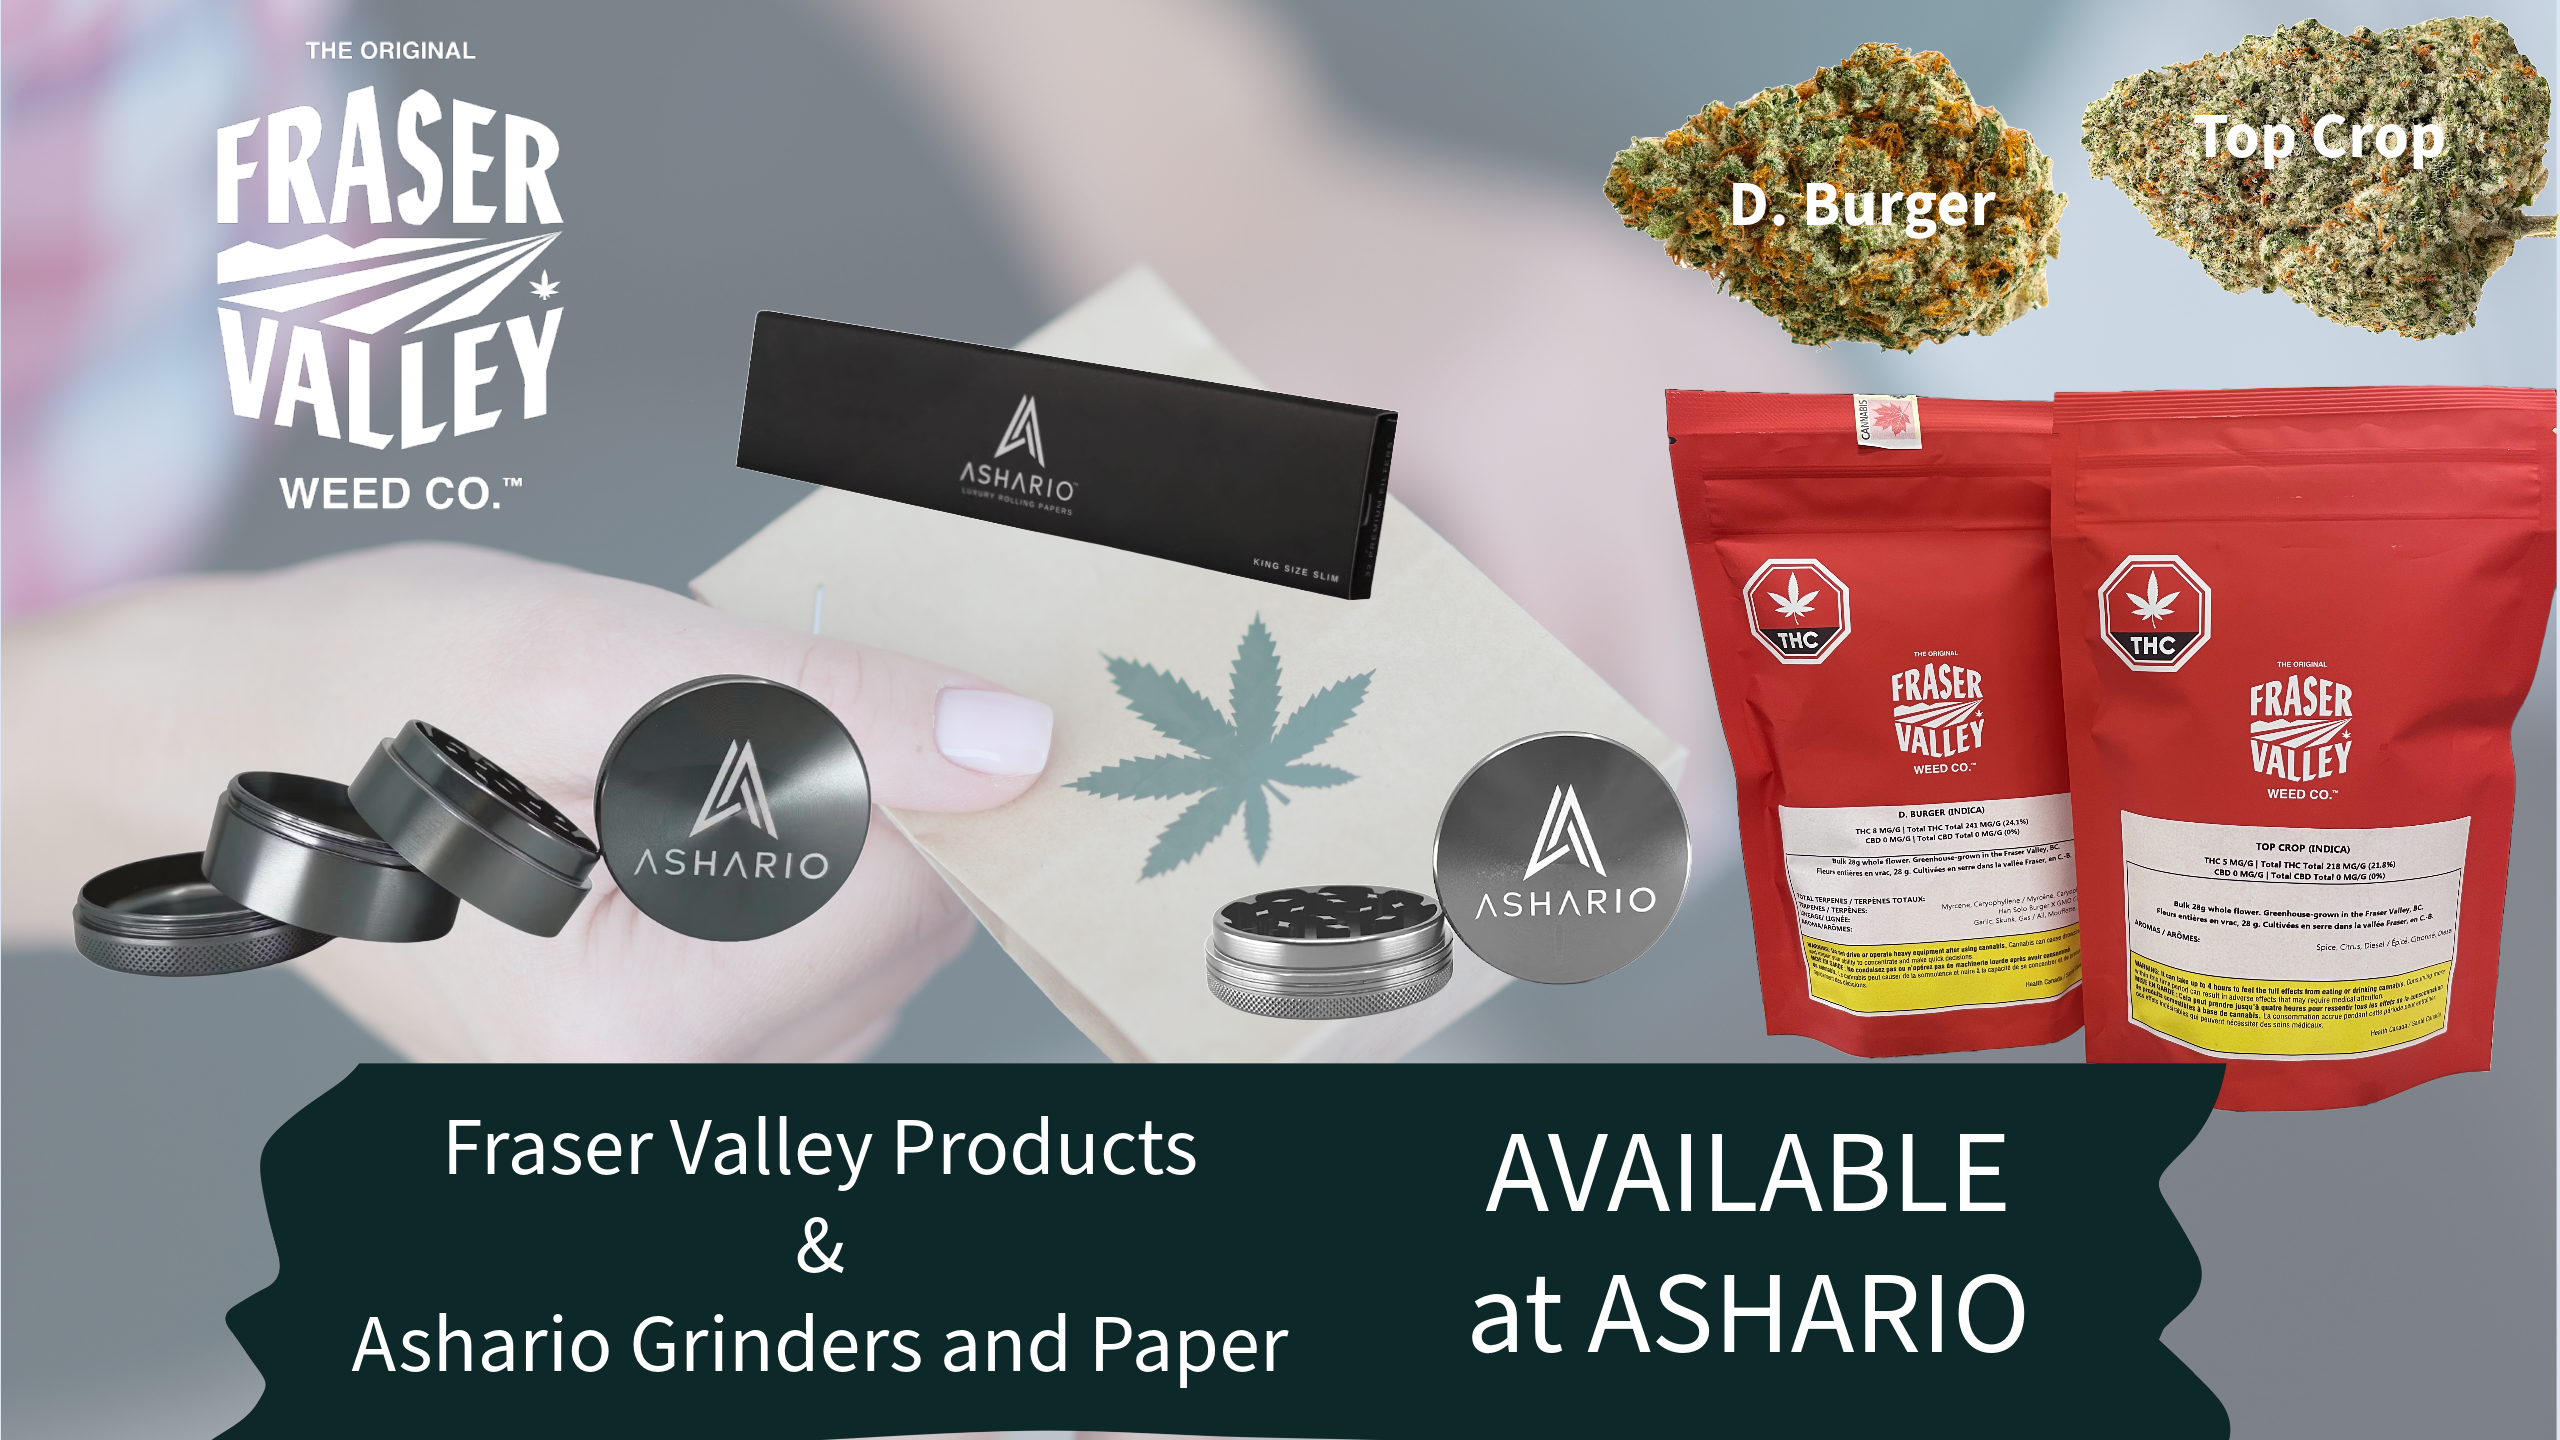 Ashario Cannabis Brand Spotlight: The Original Fraser Valley Weed Co